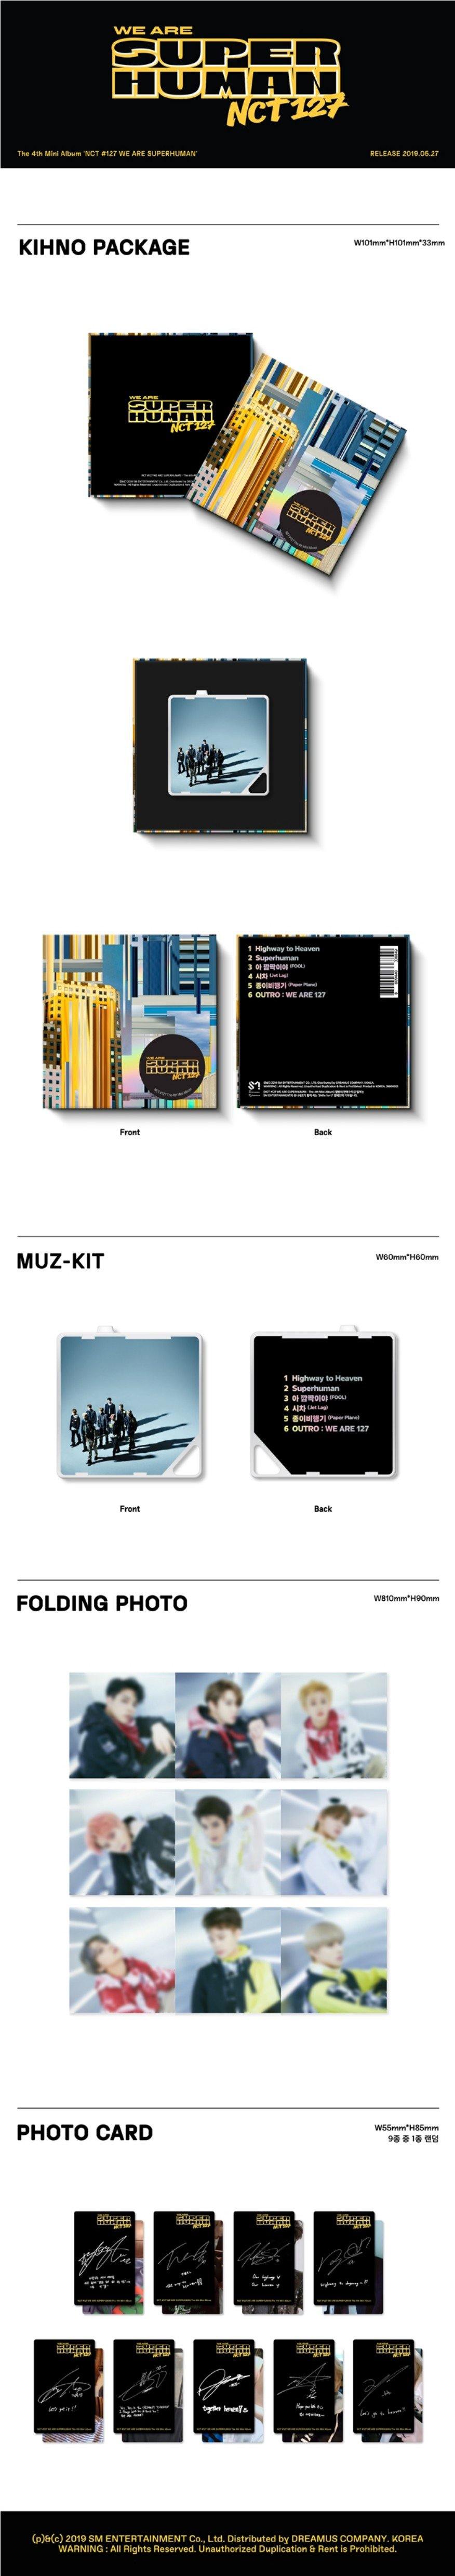 NCT 127 - We are Superhuman - Kit Album - J-Store Online